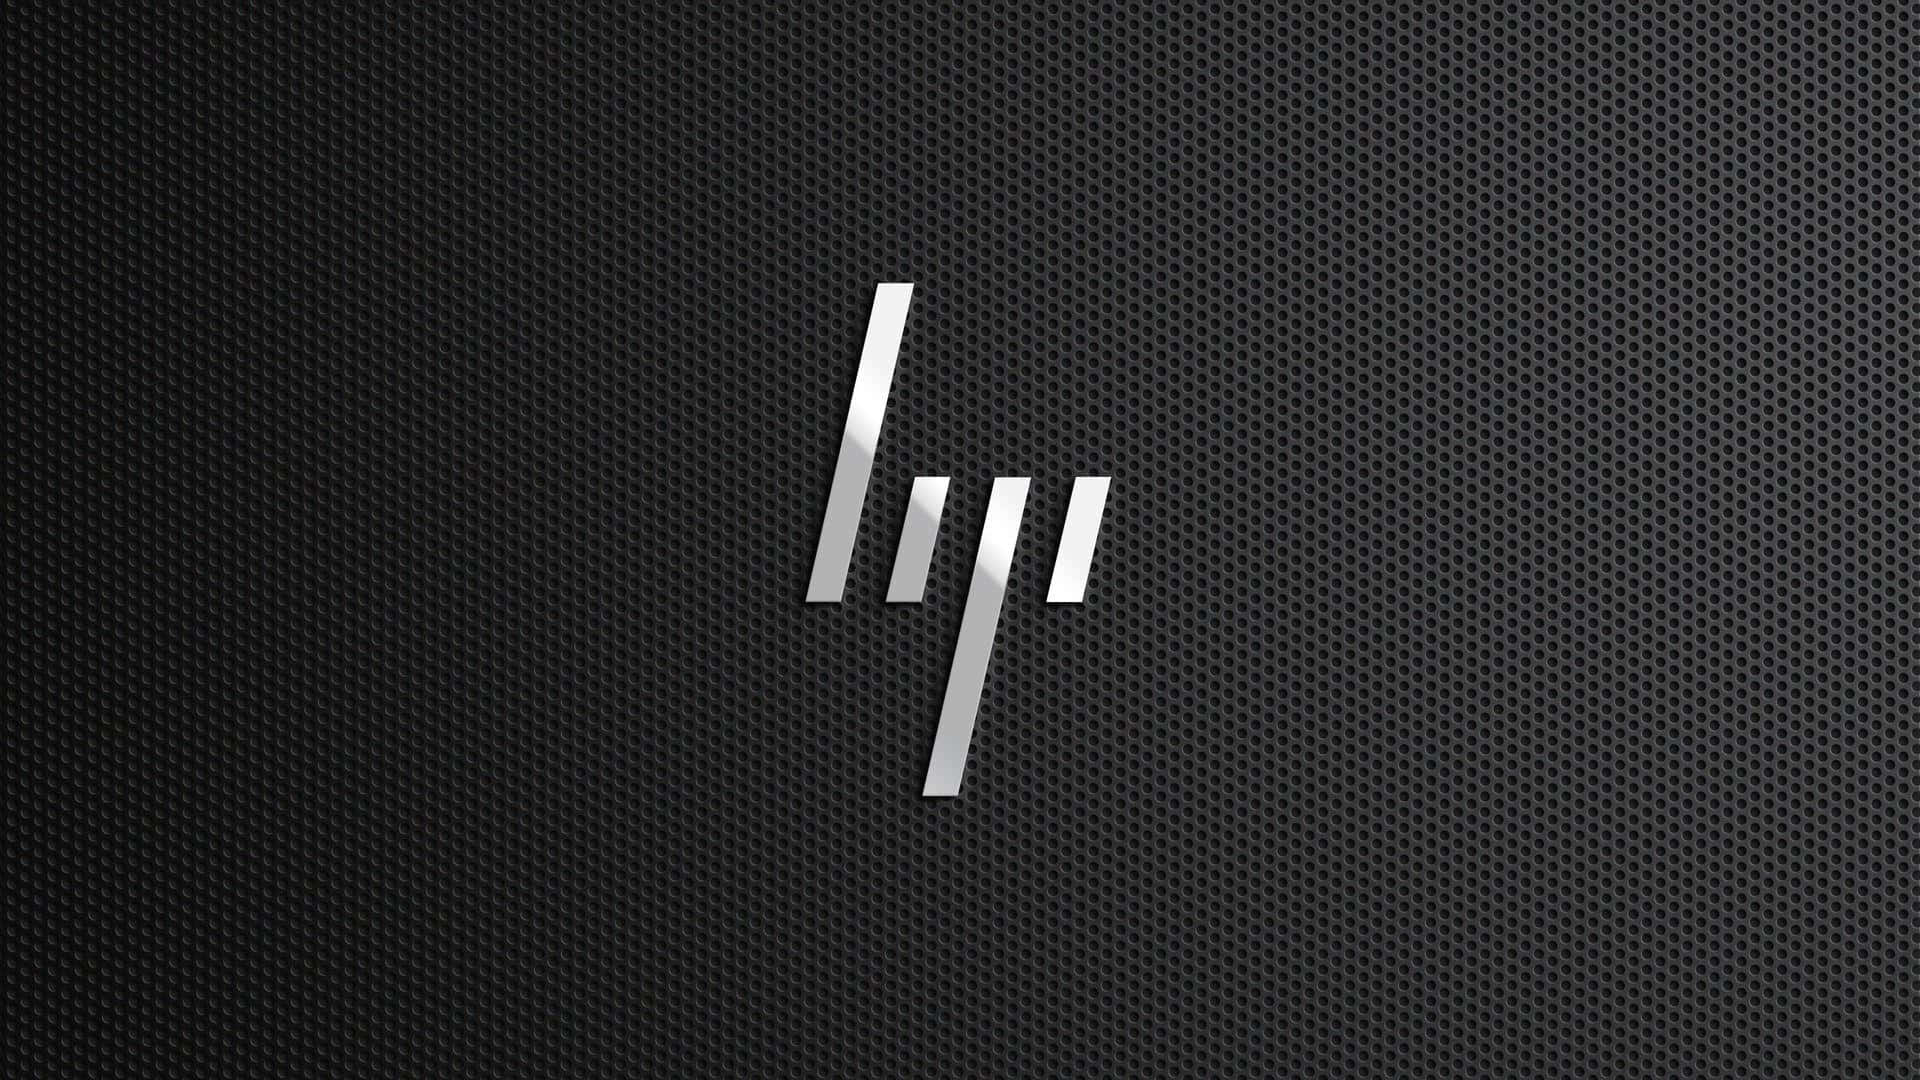 Hp Logo On A Black Background